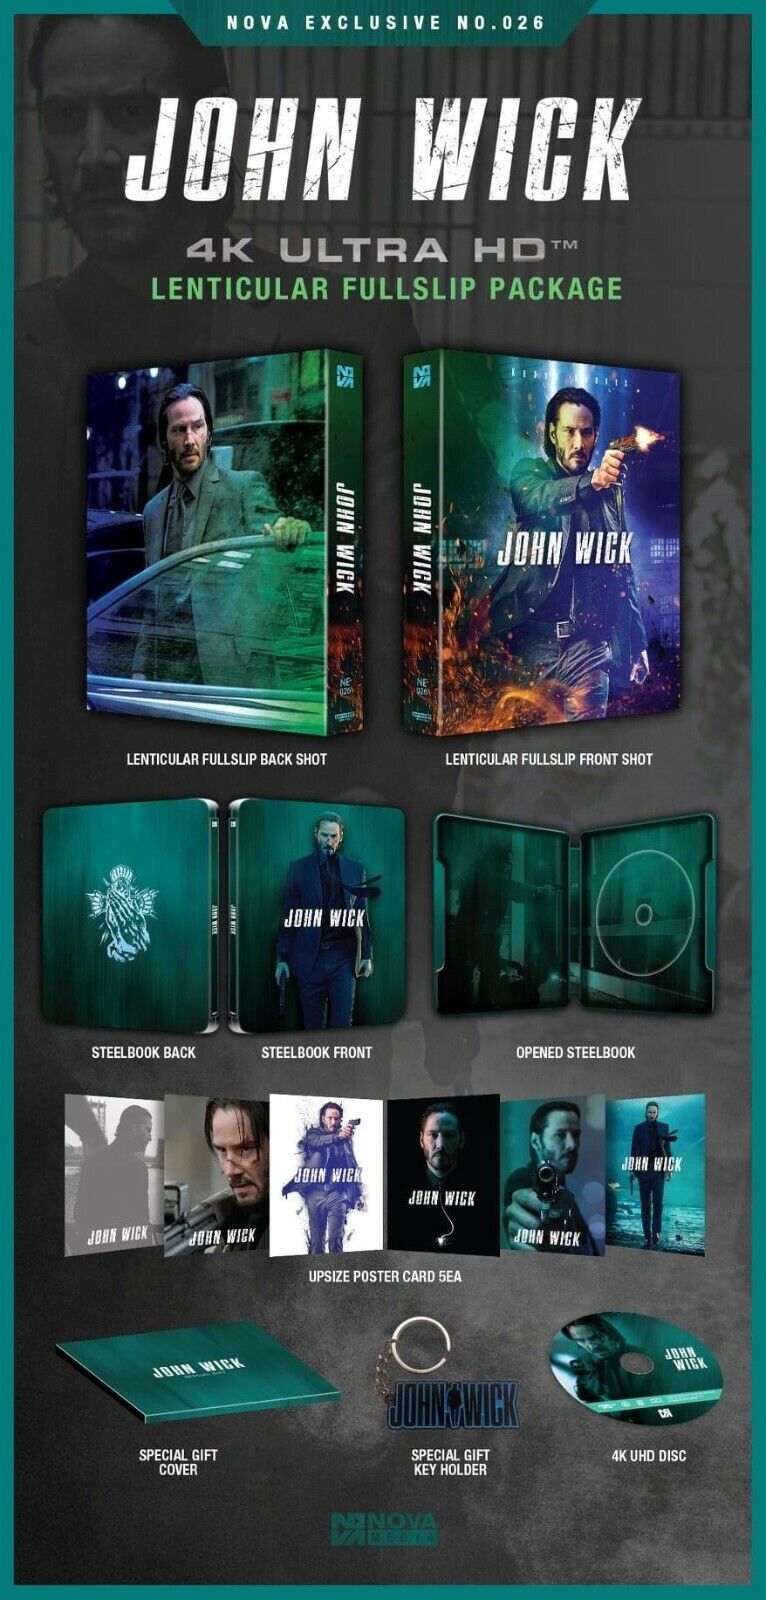 John Wick 4K Blu-ray Steelbook Novamedia Exclusive #26 One Click Set